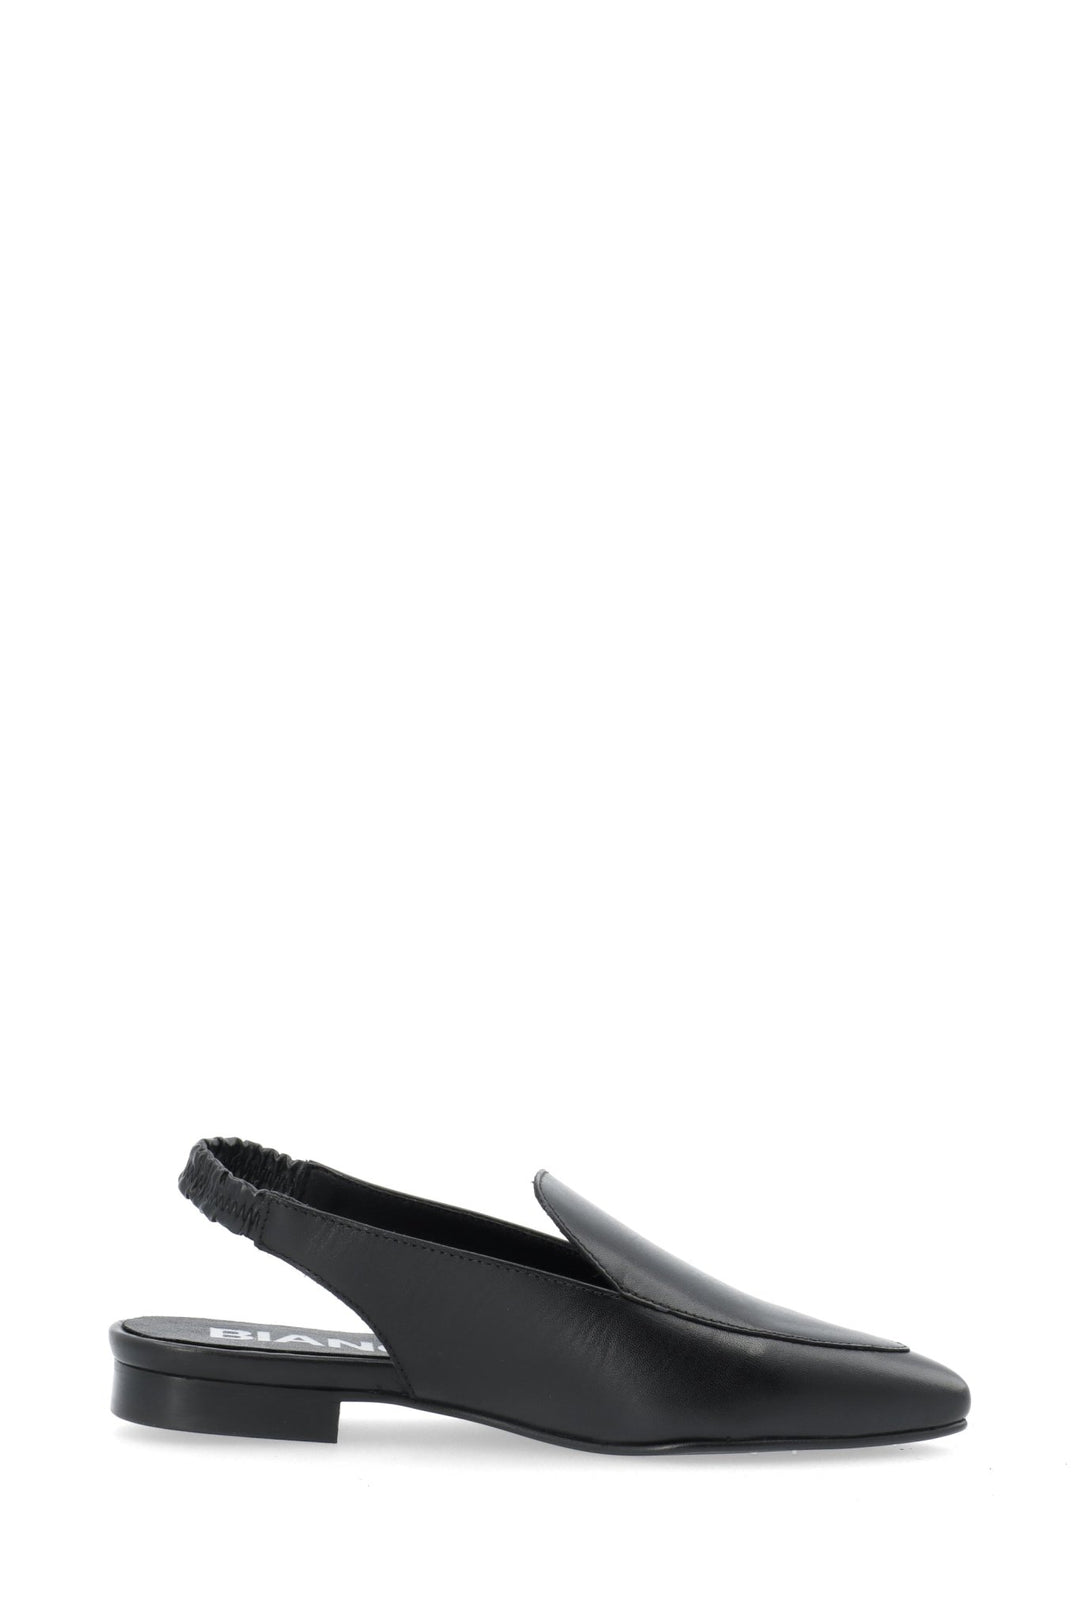 Biatracey Slingback Smooth Leather Black | Sko | Smuk - Dameklær på nett